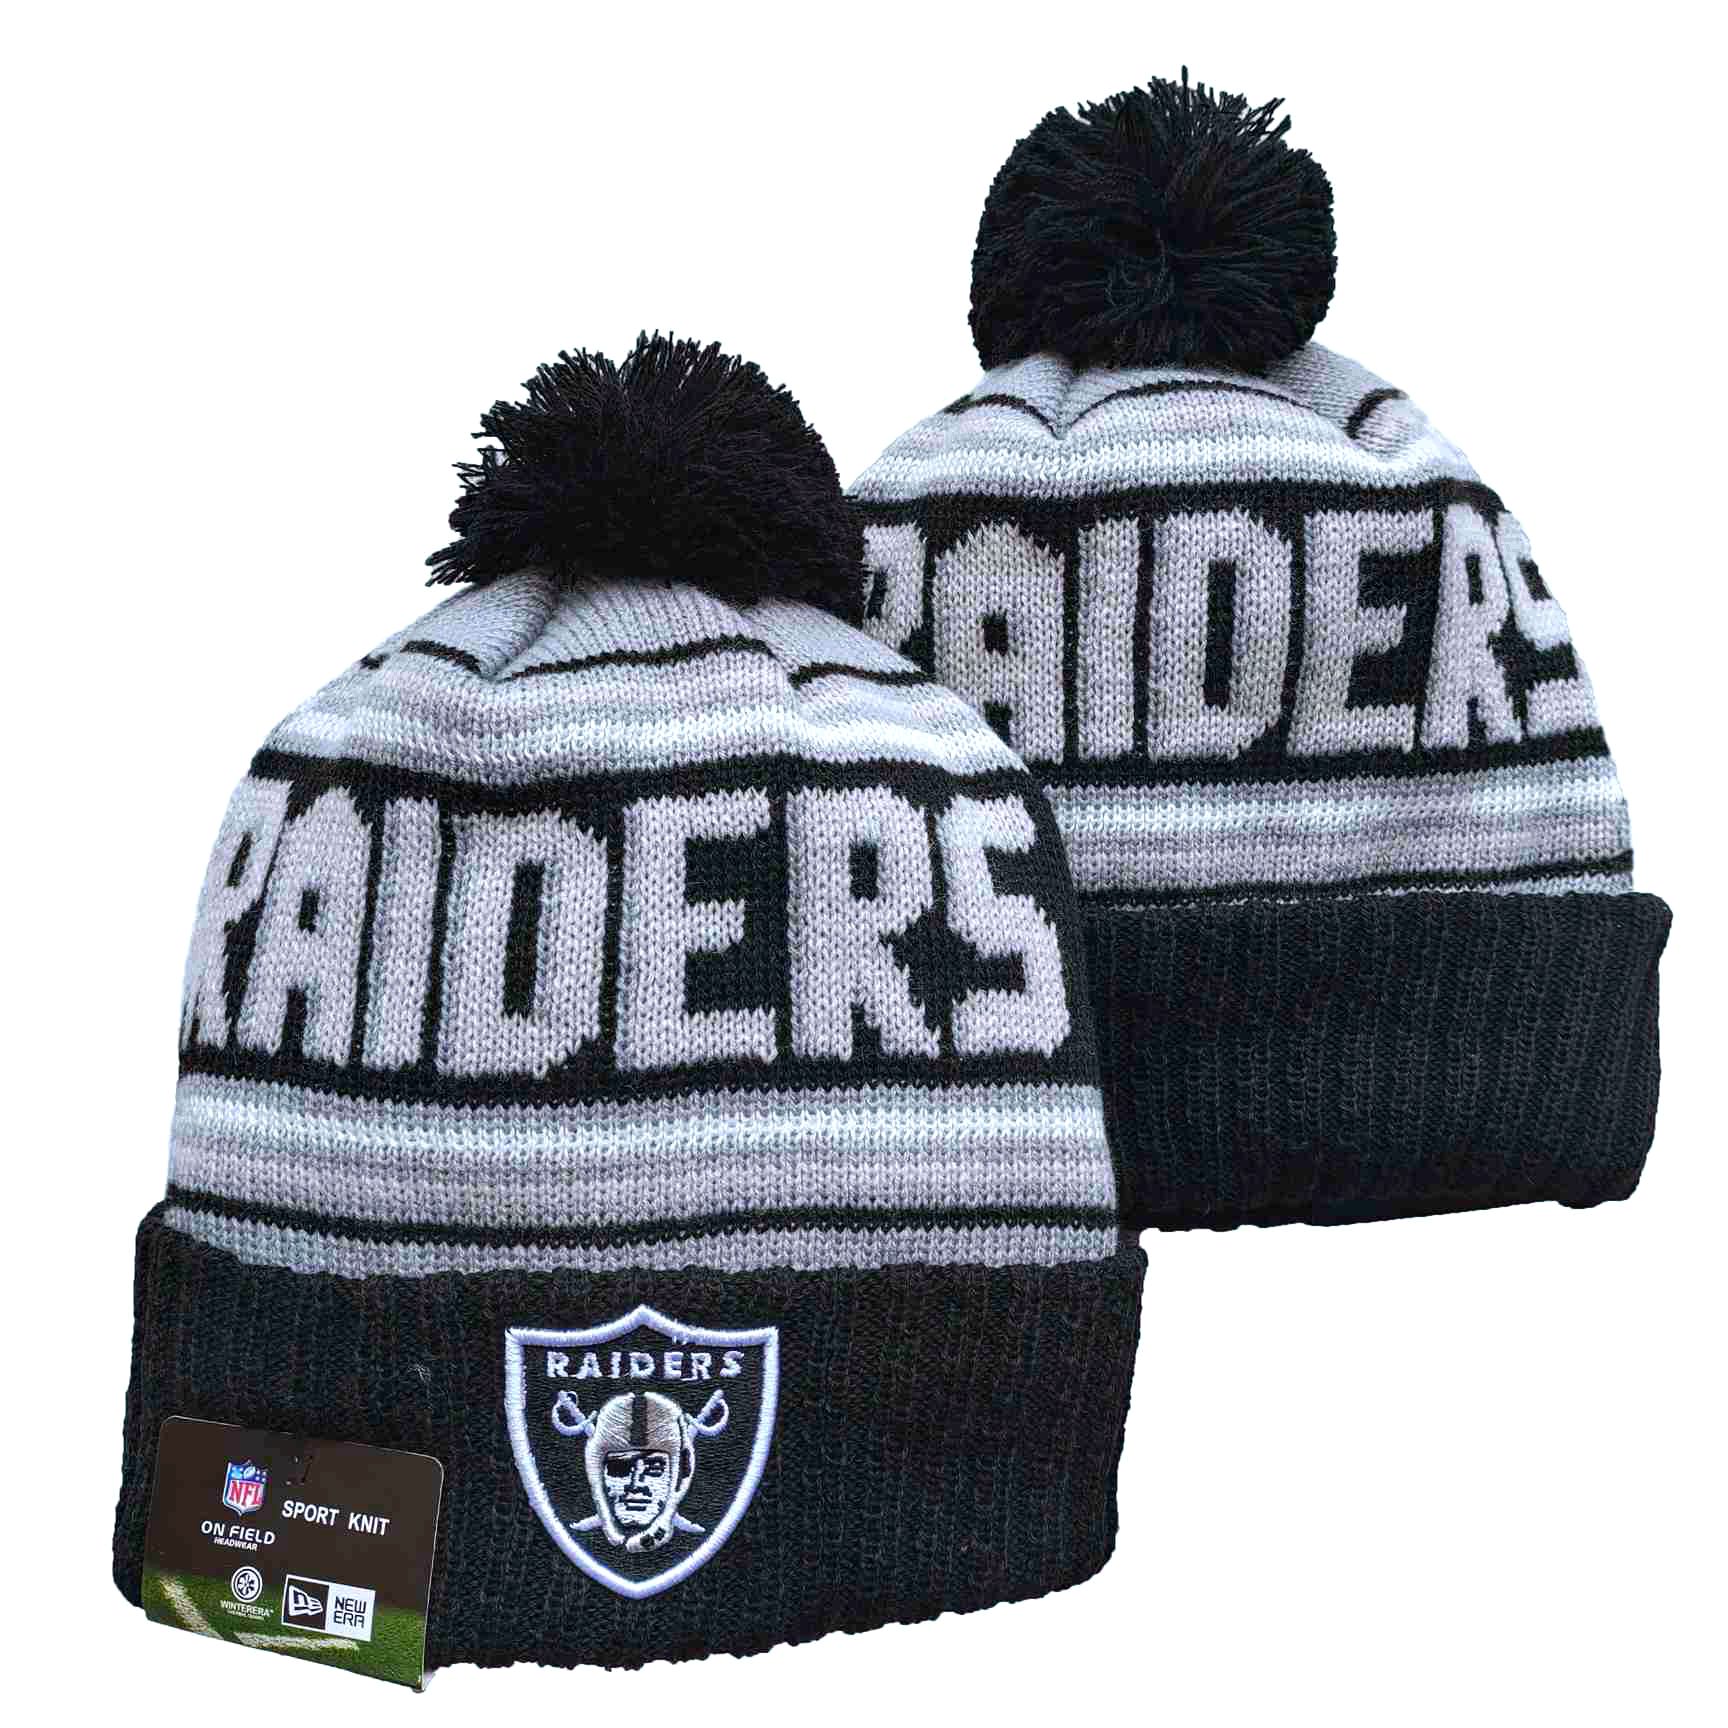 NFL Oakland Raiders Beanies Knit Hats-YD1096